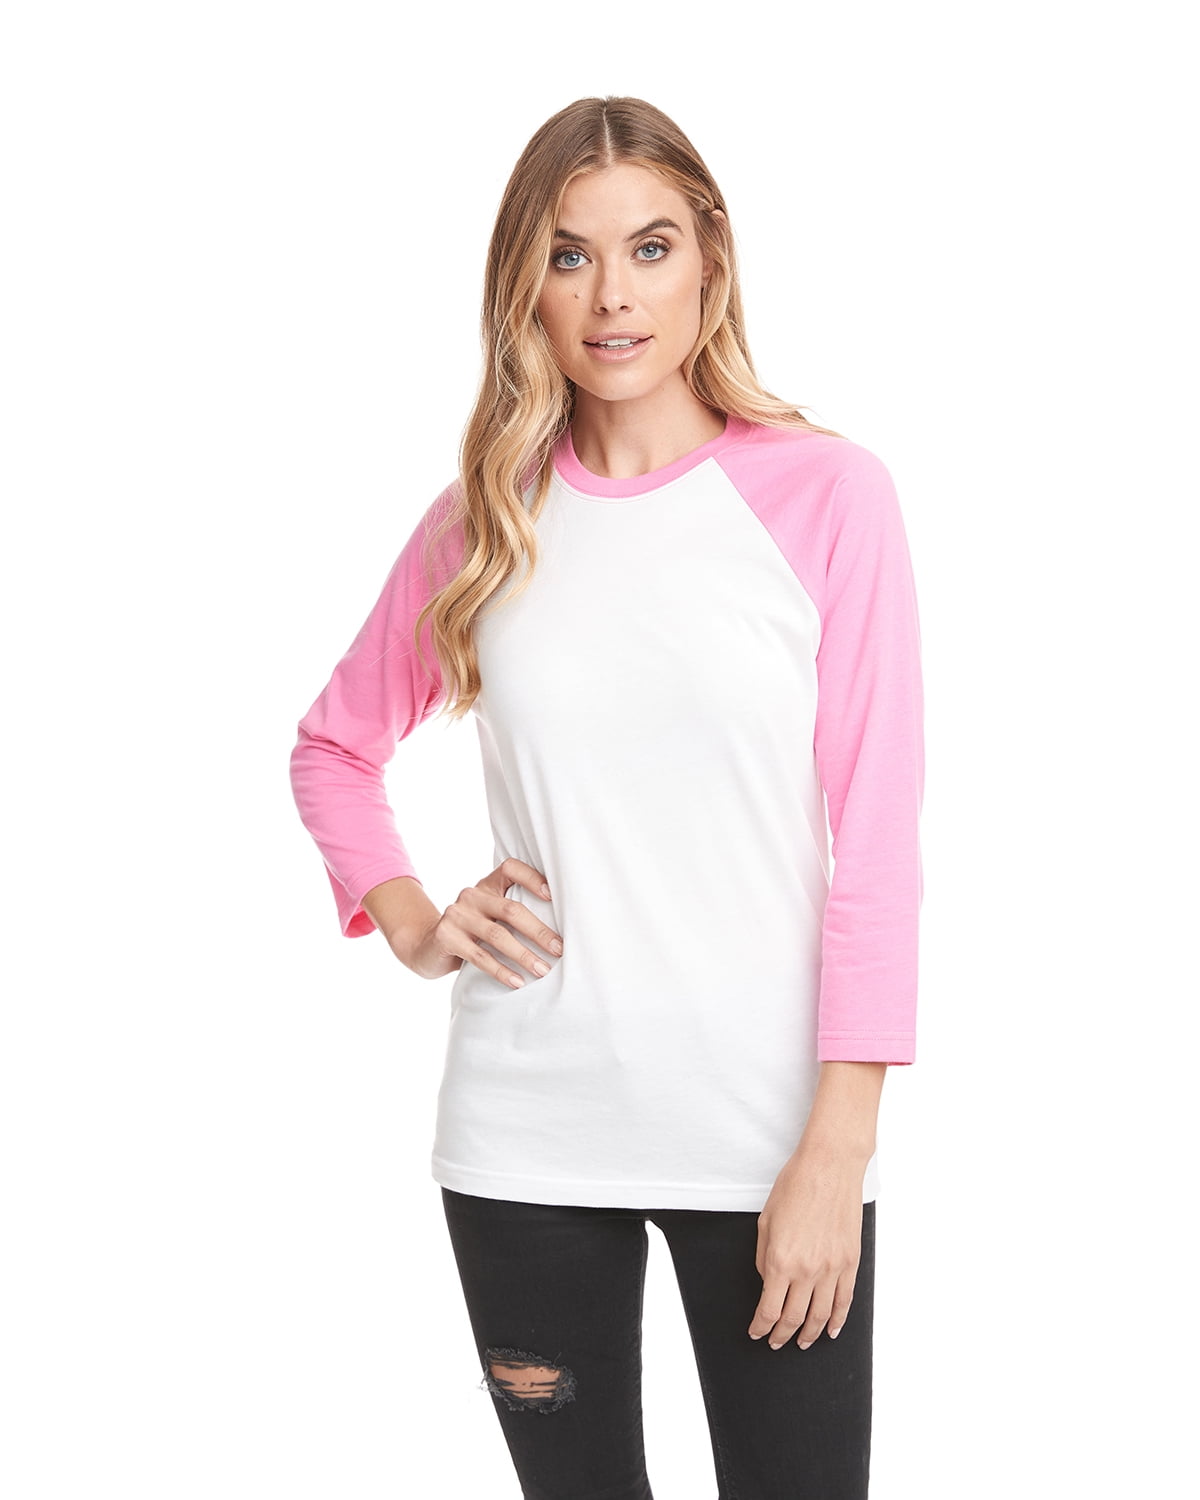 Next Level The Unisex Cvc 3 4 Sleeve Raglan Baseball T Shirt Hot Pink White S Walmart